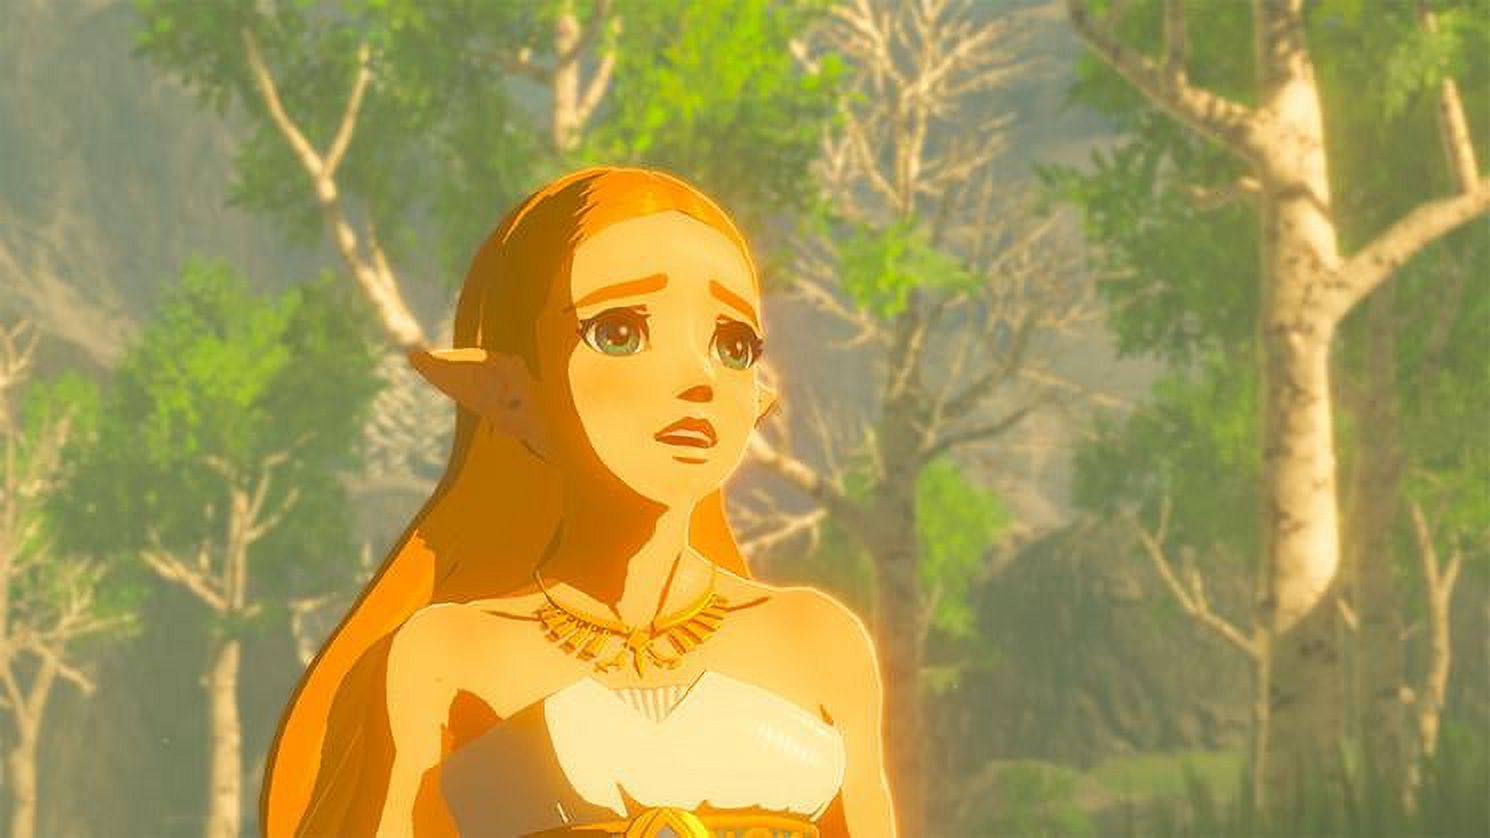 The Legend of Zelda: Breath of the Wild - Nintendo Switch - image 7 of 17